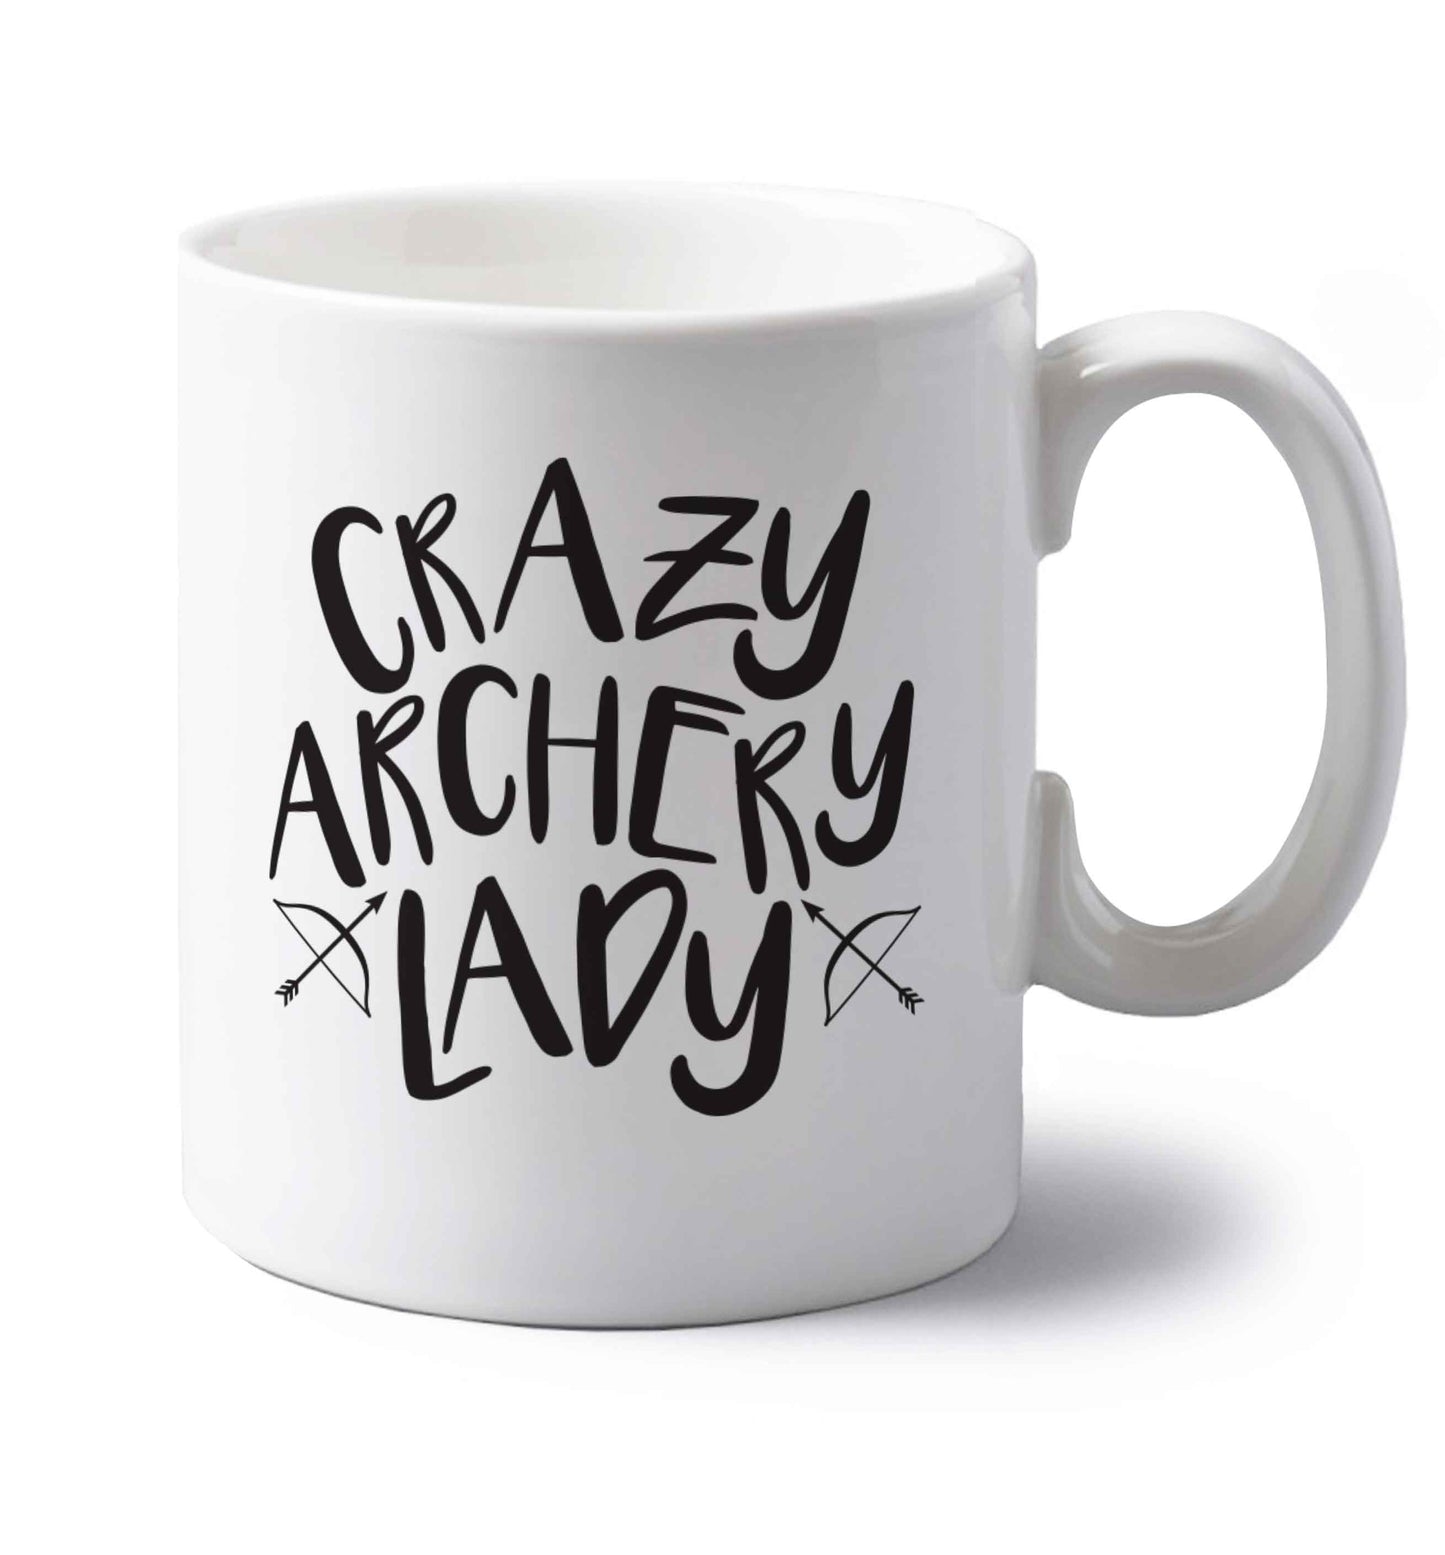 Crazy archery lady left handed white ceramic mug 